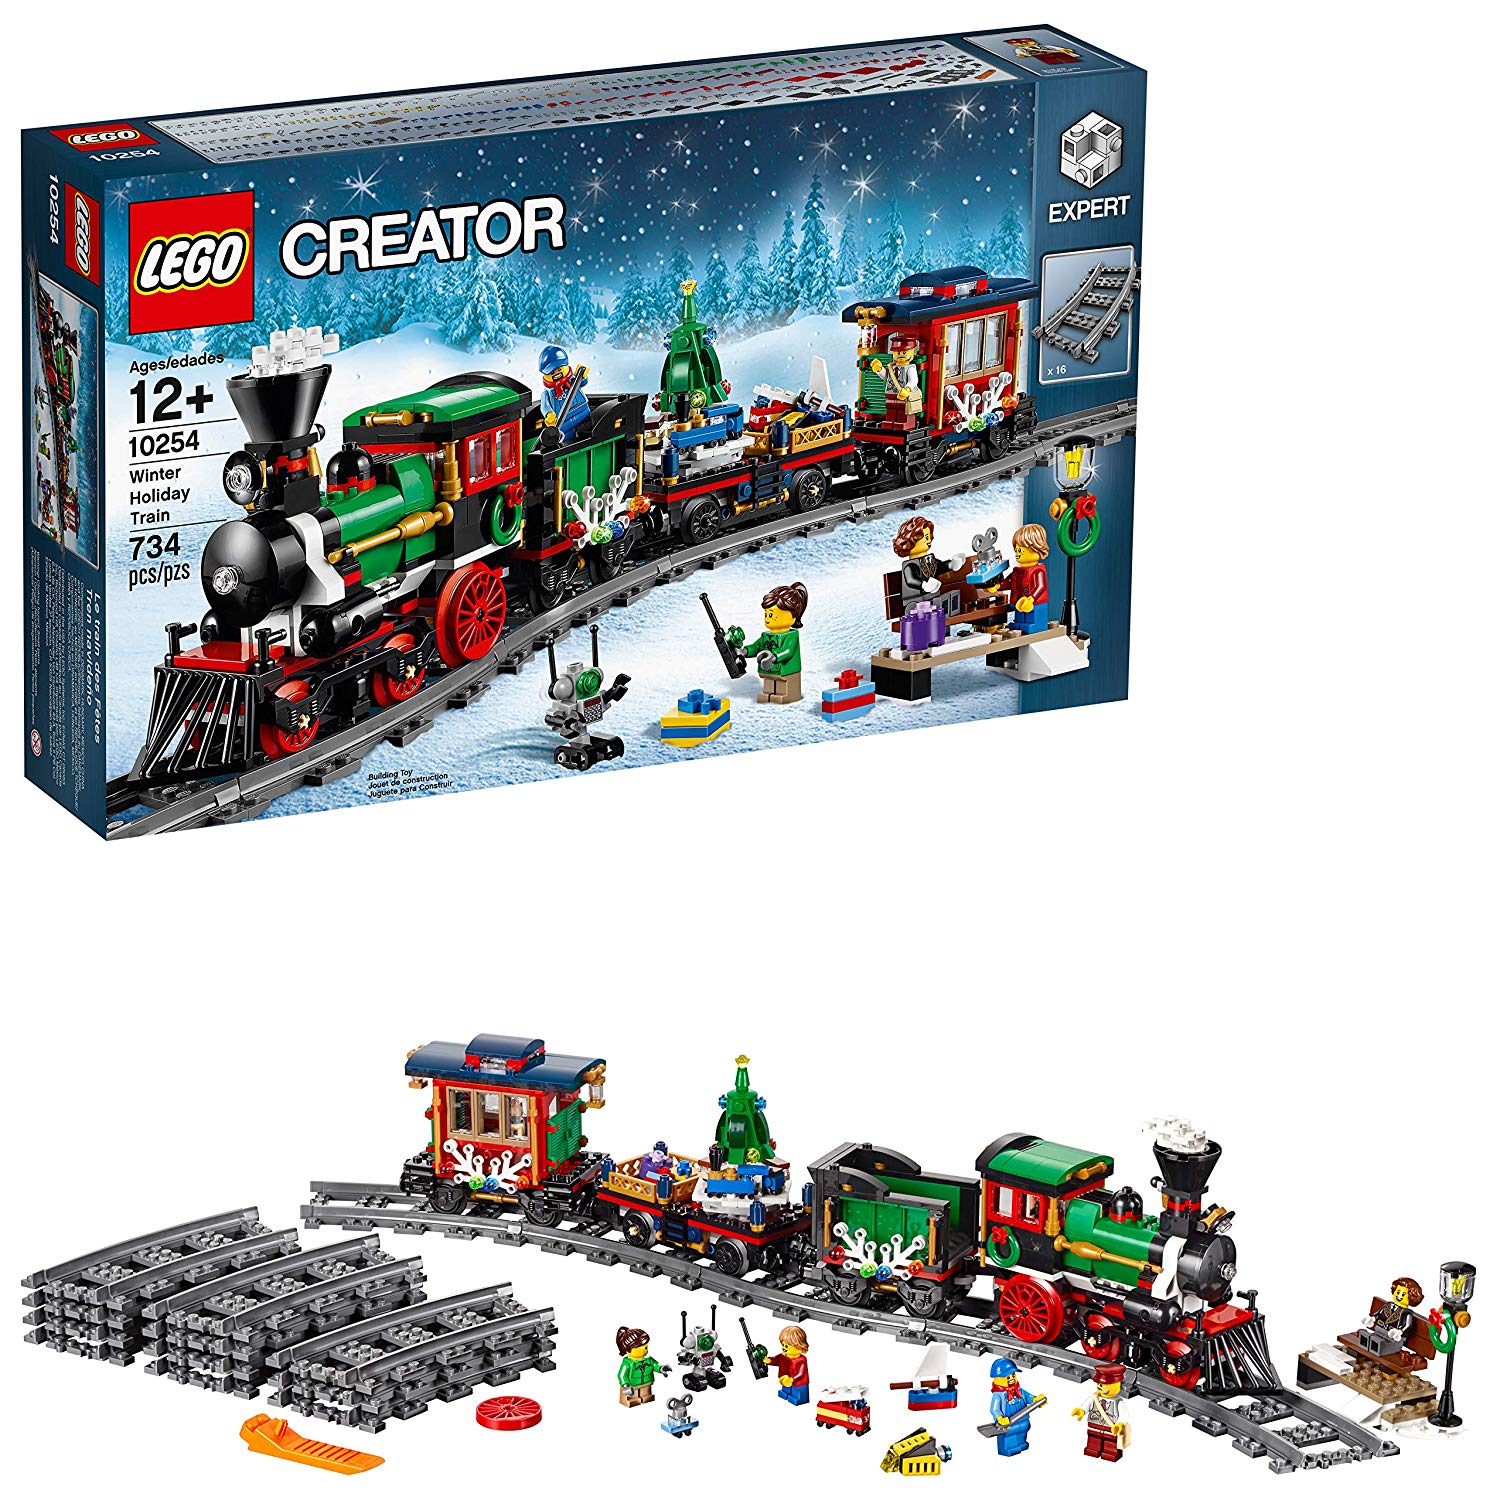 LEGO CREATOR Expert Winter Holiday